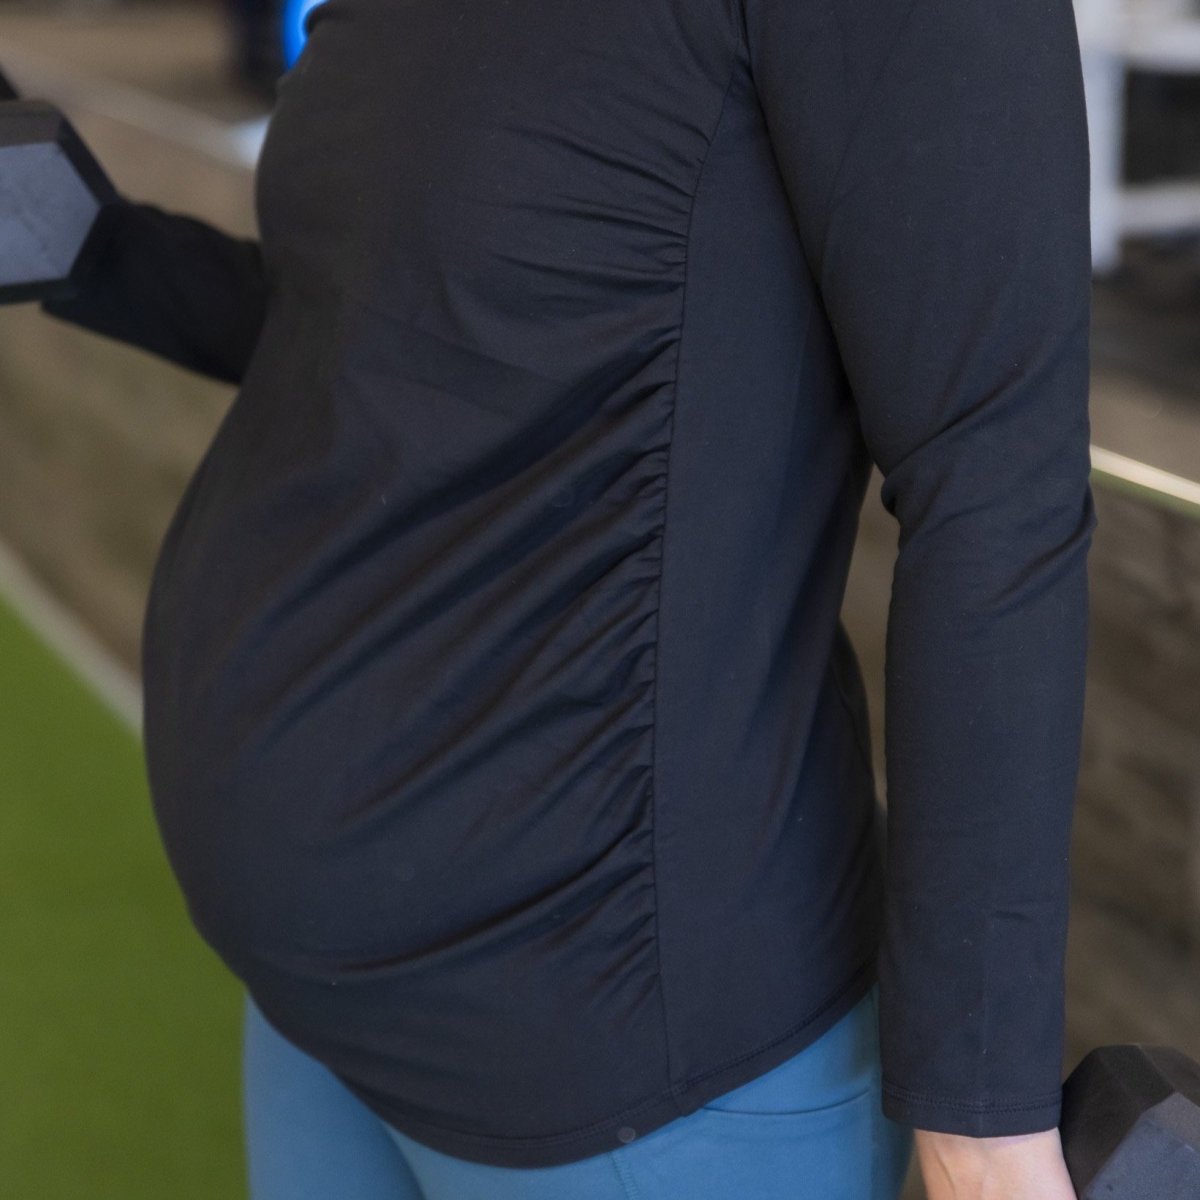 Bumpin' Maternity Tank - Mulberry – Senita Athletics